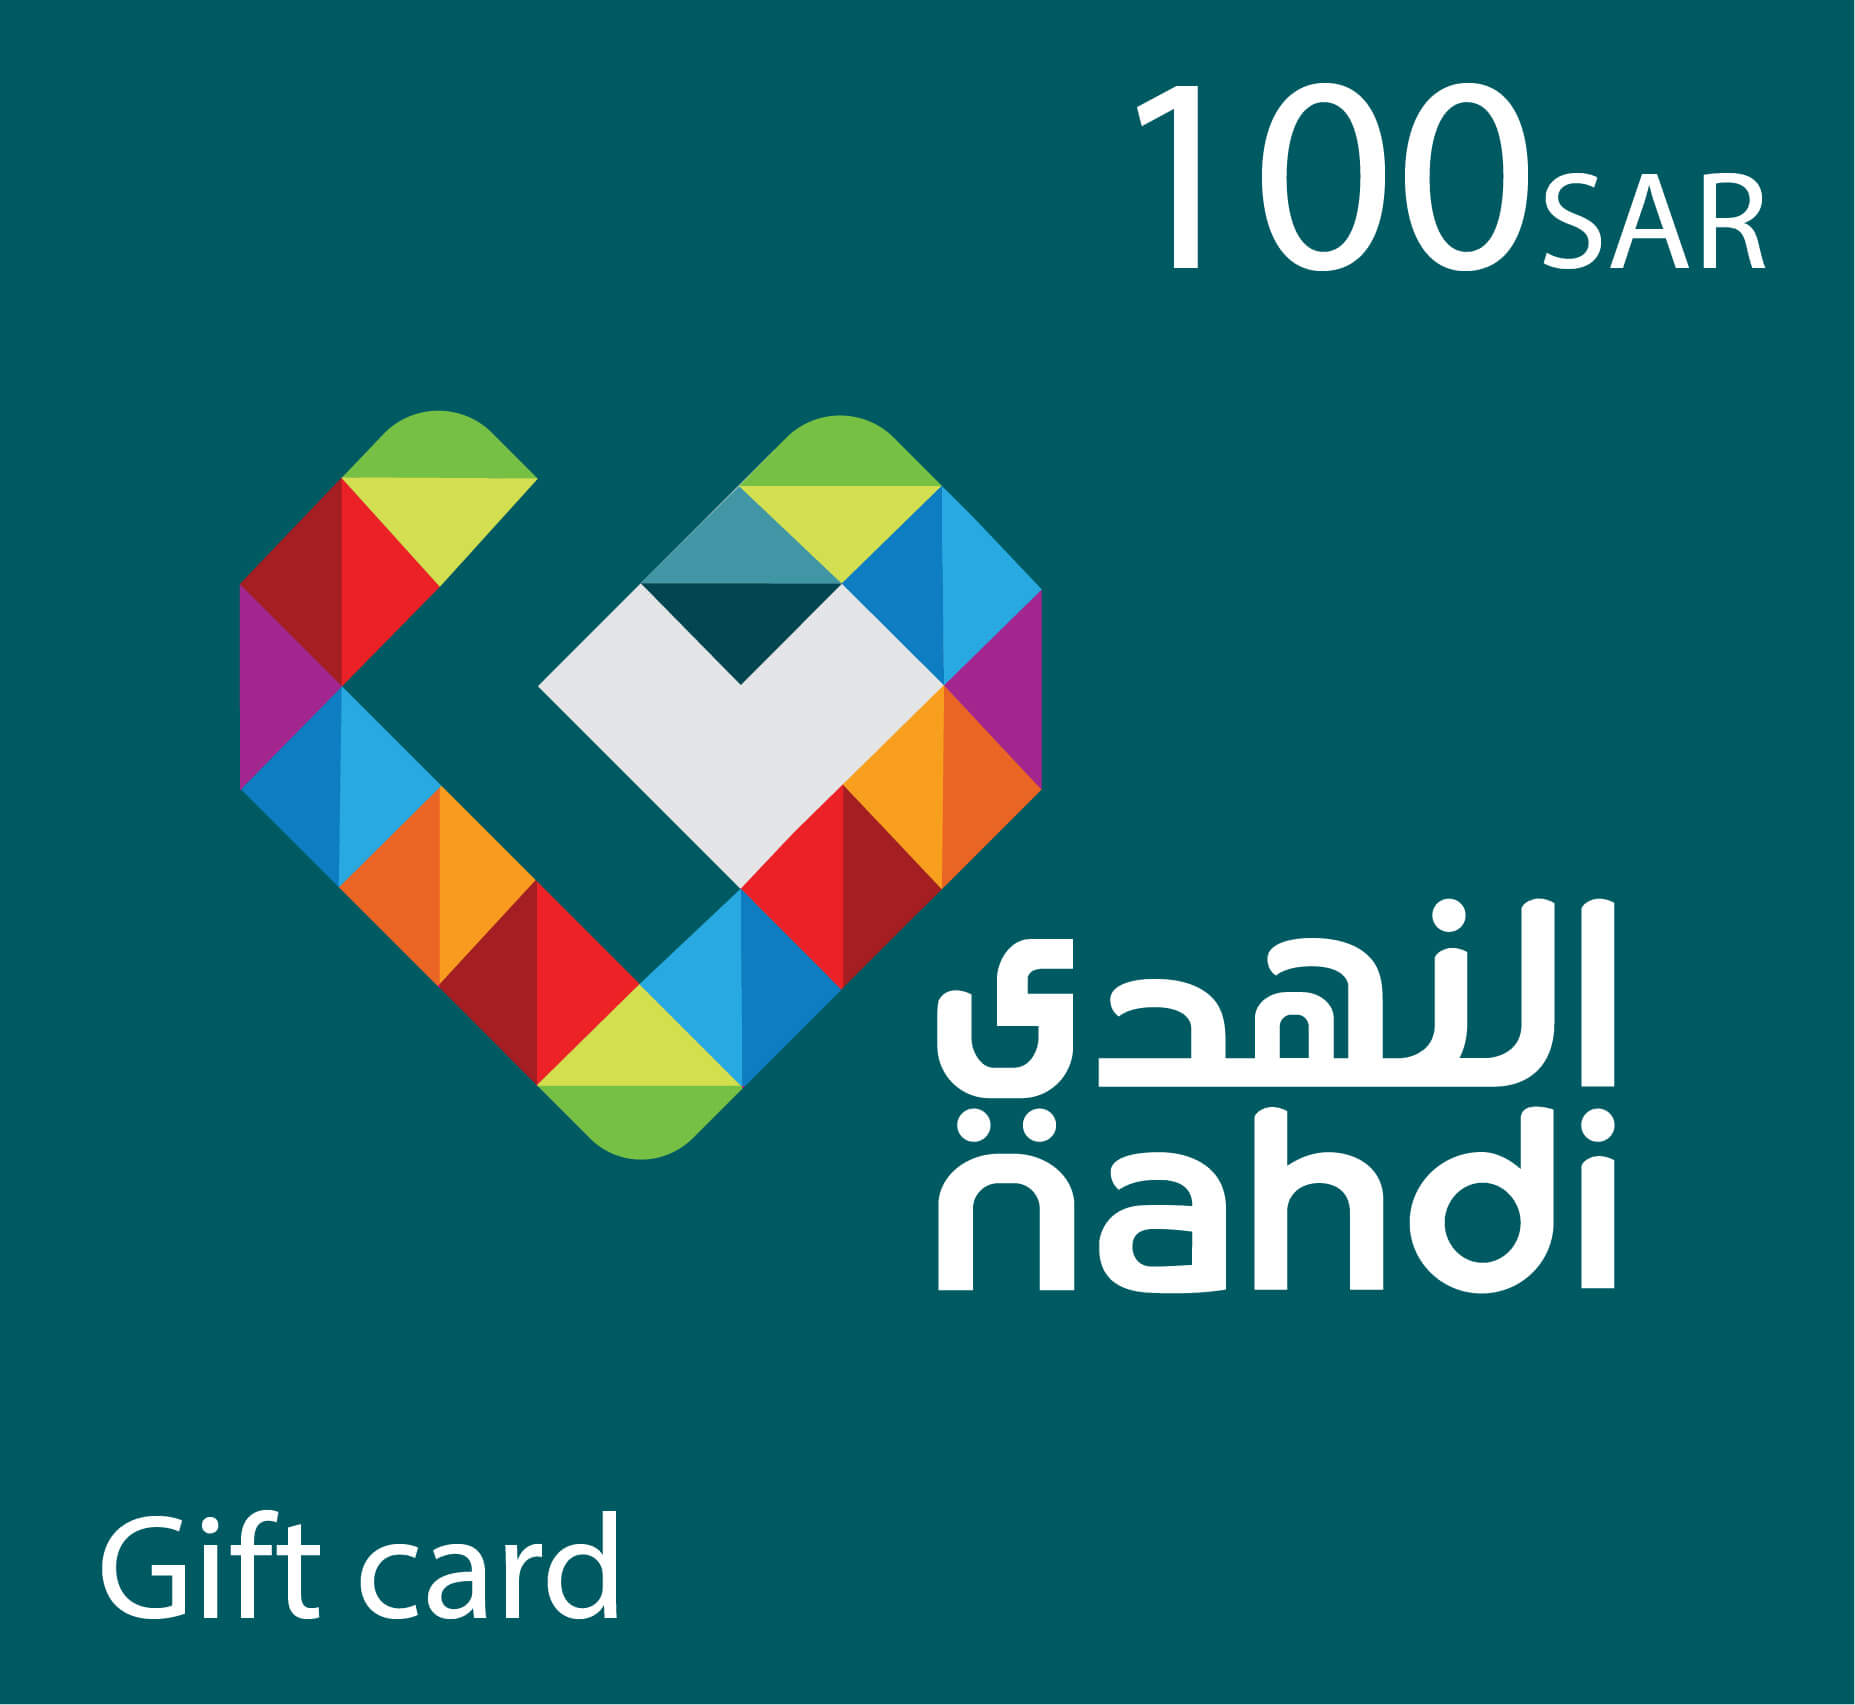 Nahdi Pharmacy Gift Card - 100 SAR